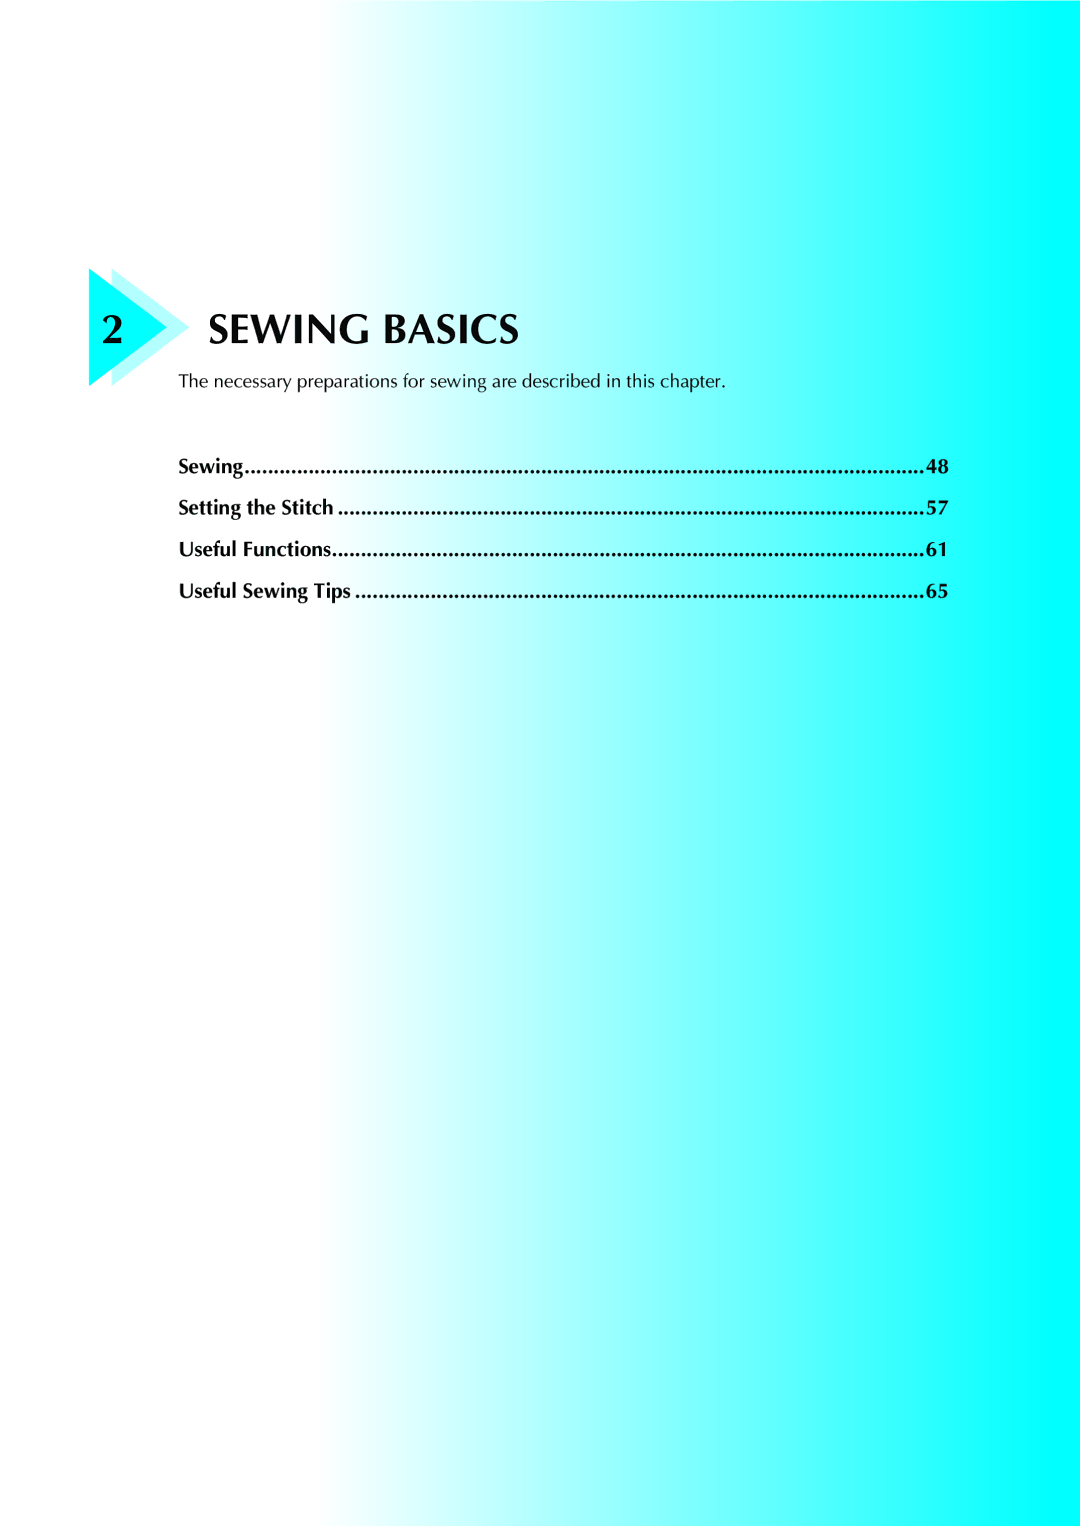 Brother 885-V31/V33 operation manual Sewing Basics 